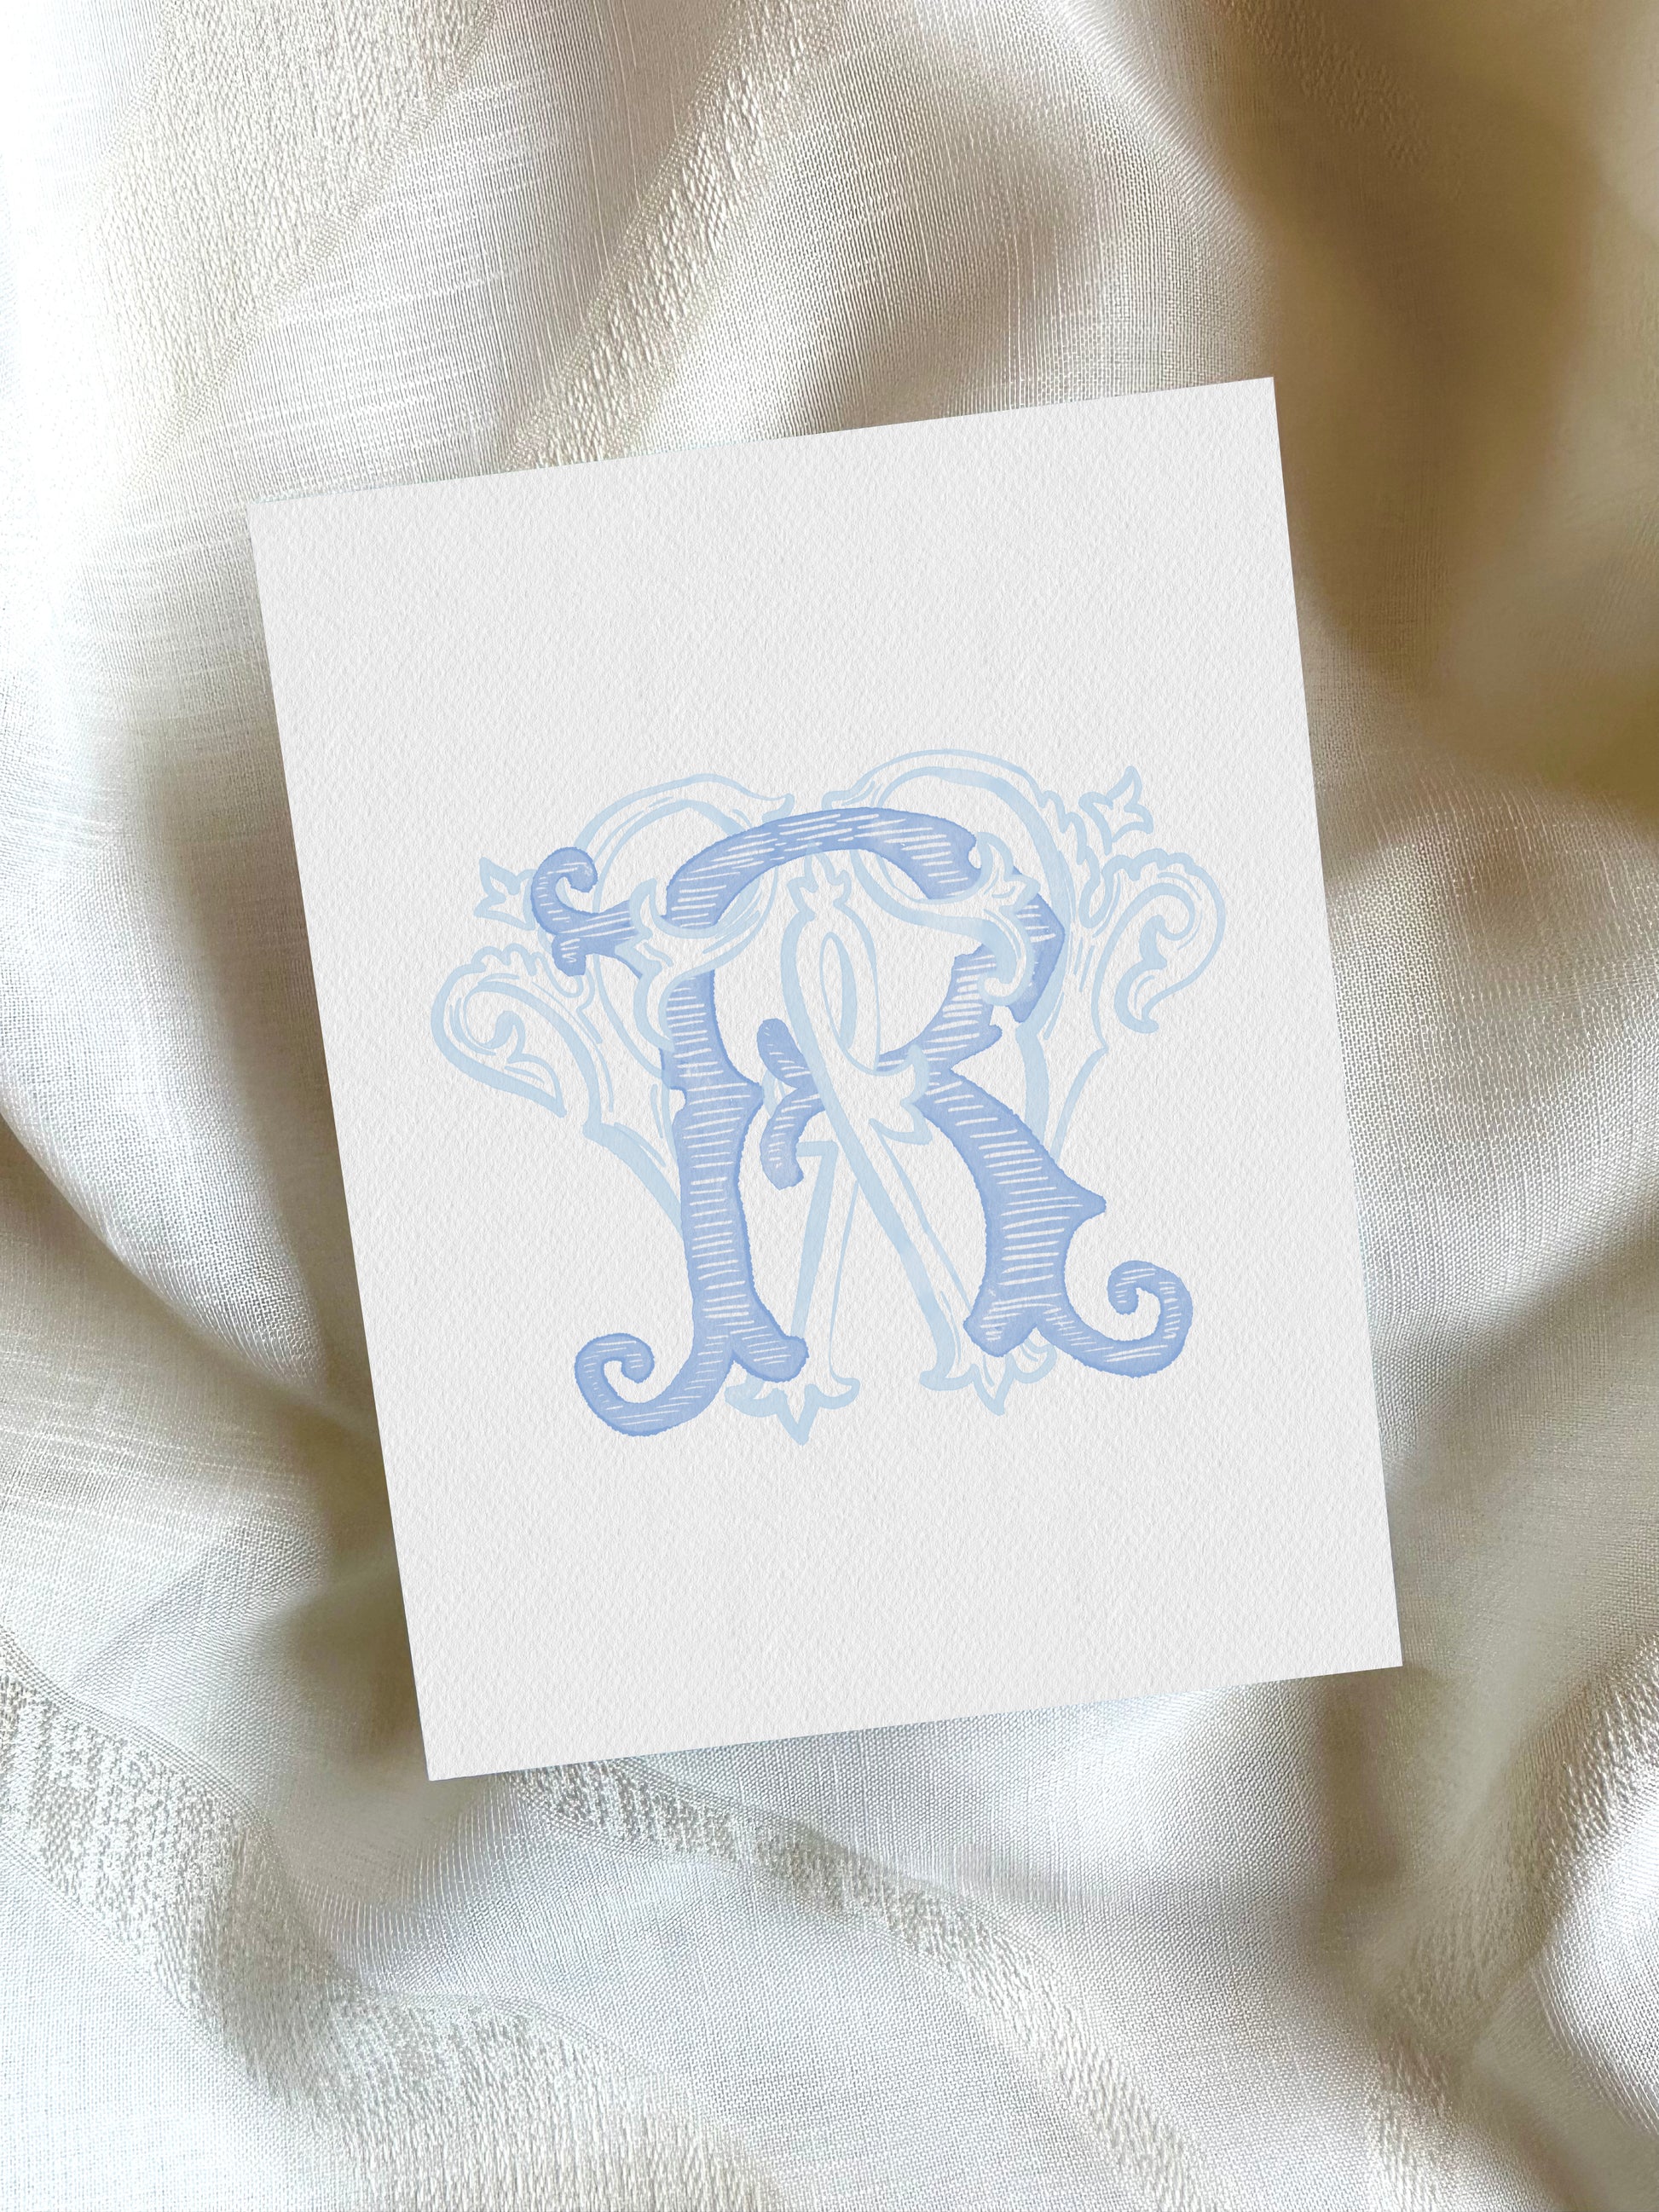 2 Letter Monogram with Letters RW WR | Digital Download - Wedding Monogram SVG, Personal Logo, Wedding Logo for Wedding Invitations The Wedding Crest Lab